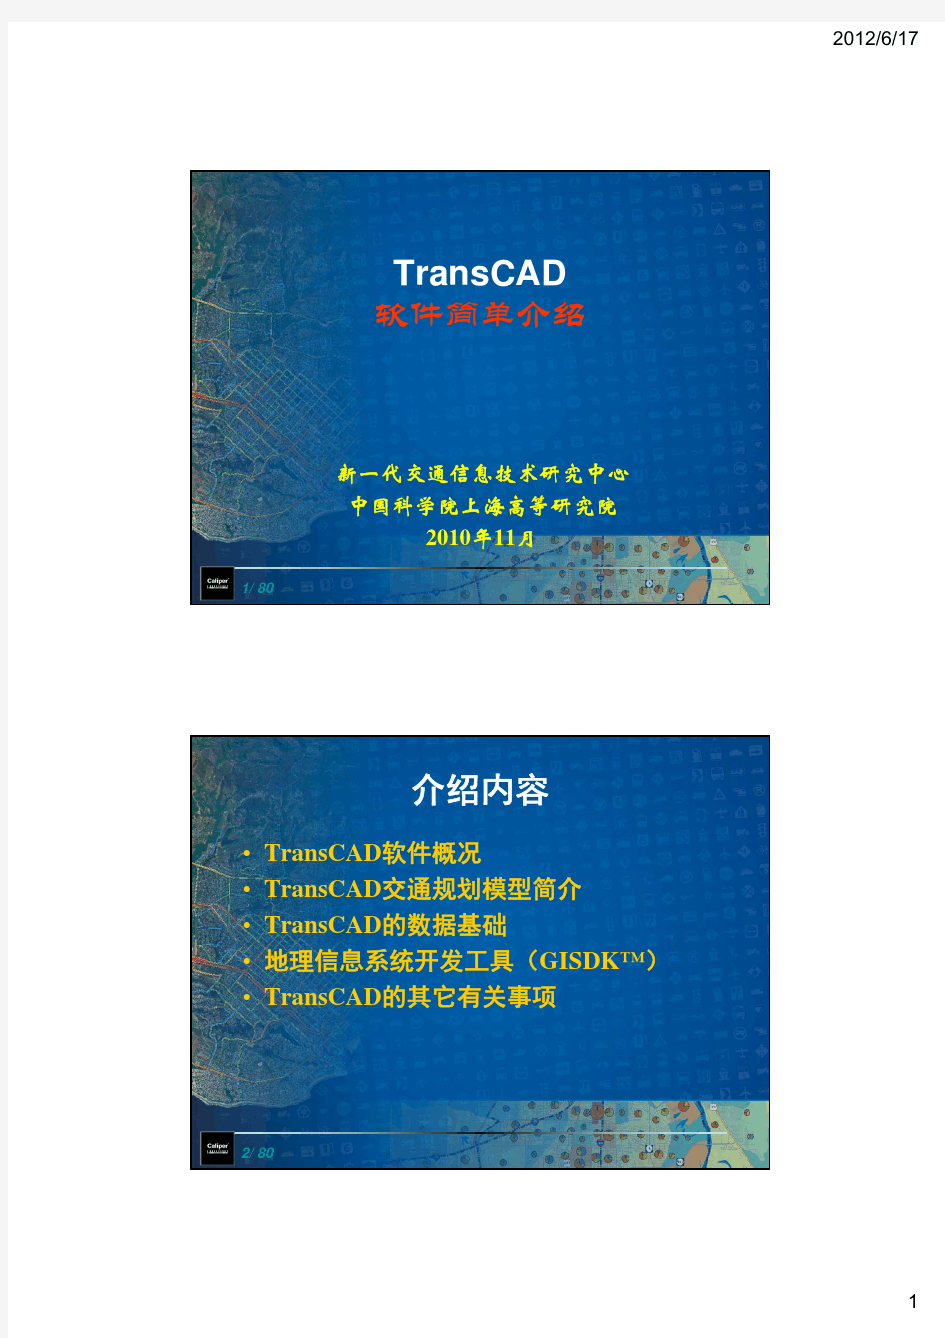 TransCAD软件简单介绍